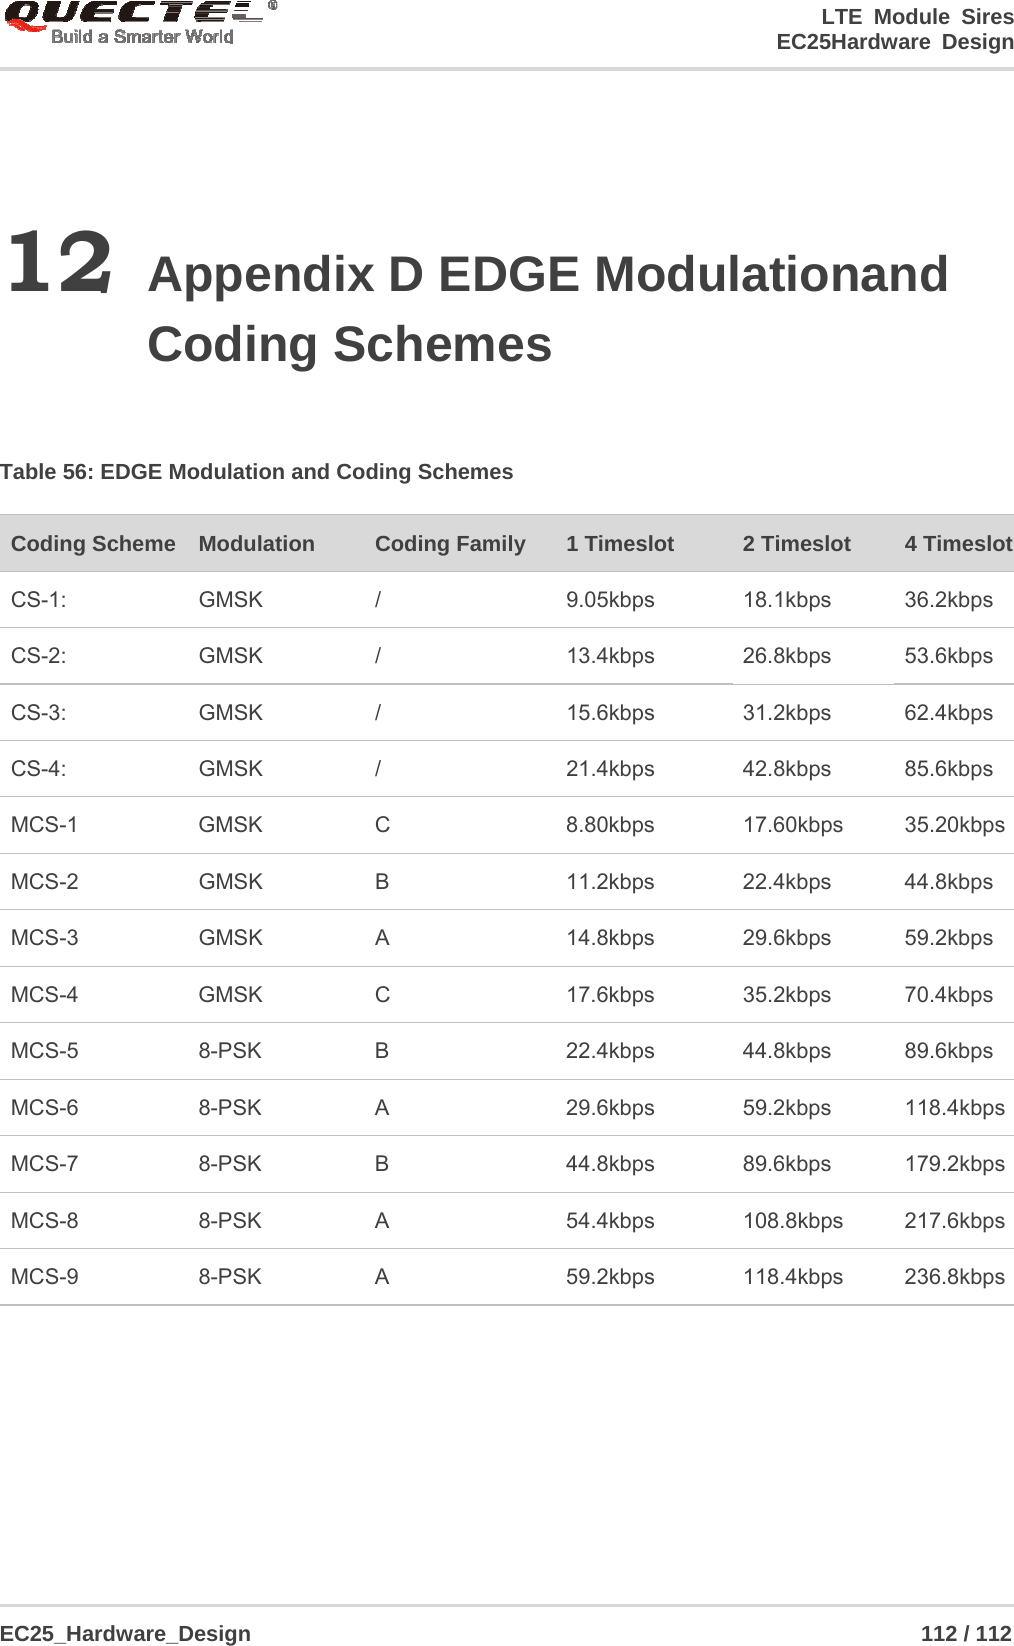 LTE Module Sires                                                                 EC25Hardware Design  EC25_Hardware_Design                                                             112 / 112    12 Appendix D EDGE Modulationand Coding Schemes  Table 56: EDGE Modulation and Coding Schemes        Coding Scheme Modulation  Coding Family 1 Timeslot 2 Timeslot  4 TimeslotCS-1: GMSK /  9.05kbps 18.1kbps 36.2kbps CS-2: GMSK /  13.4kbps 26.8kbps 53.6kbps CS-3: GMSK /  15.6kbps 31.2kbps 62.4kbps CS-4: GMSK /  21.4kbps 42.8kbps 85.6kbps MCS-1 GMSK C  8.80kbps 17.60kbps 35.20kbps MCS-2 GMSK B  11.2kbps 22.4kbps 44.8kbps MCS-3 GMSK A  14.8kbps 29.6kbps 59.2kbps MCS-4 GMSK C  17.6kbps 35.2kbps 70.4kbps MCS-5 8-PSK B  22.4kbps 44.8kbps 89.6kbps MCS-6 8-PSK A  29.6kbps 59.2kbps 118.4kbps MCS-7 8-PSK B  44.8kbps 89.6kbps 179.2kbps MCS-8 8-PSK A  54.4kbps 108.8kbps 217.6kbps MCS-9 8-PSK A  59.2kbps 118.4kbps 236.8kbps 